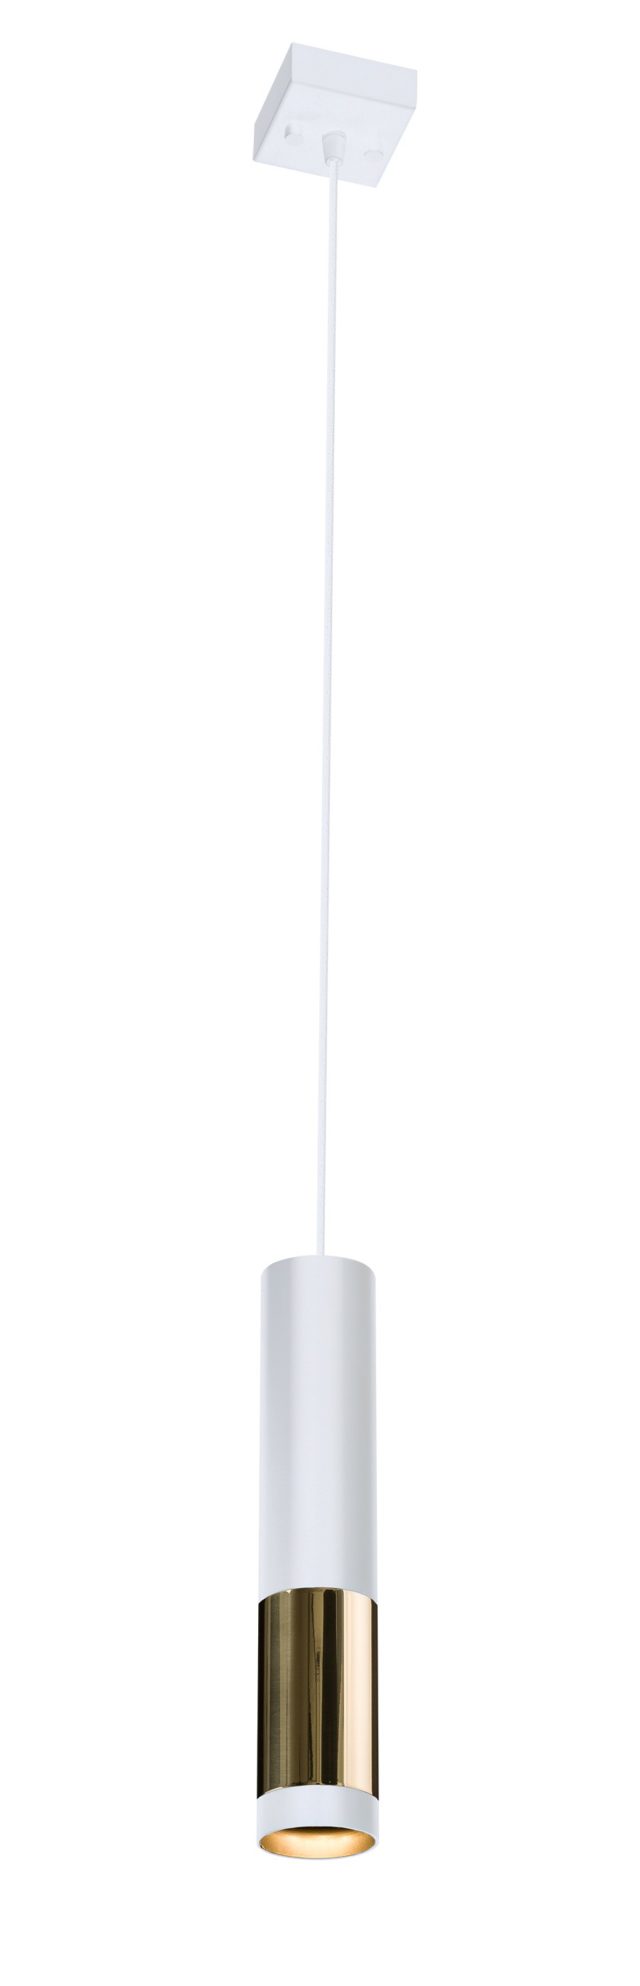 Lampa wisząca Kavos 1, biała